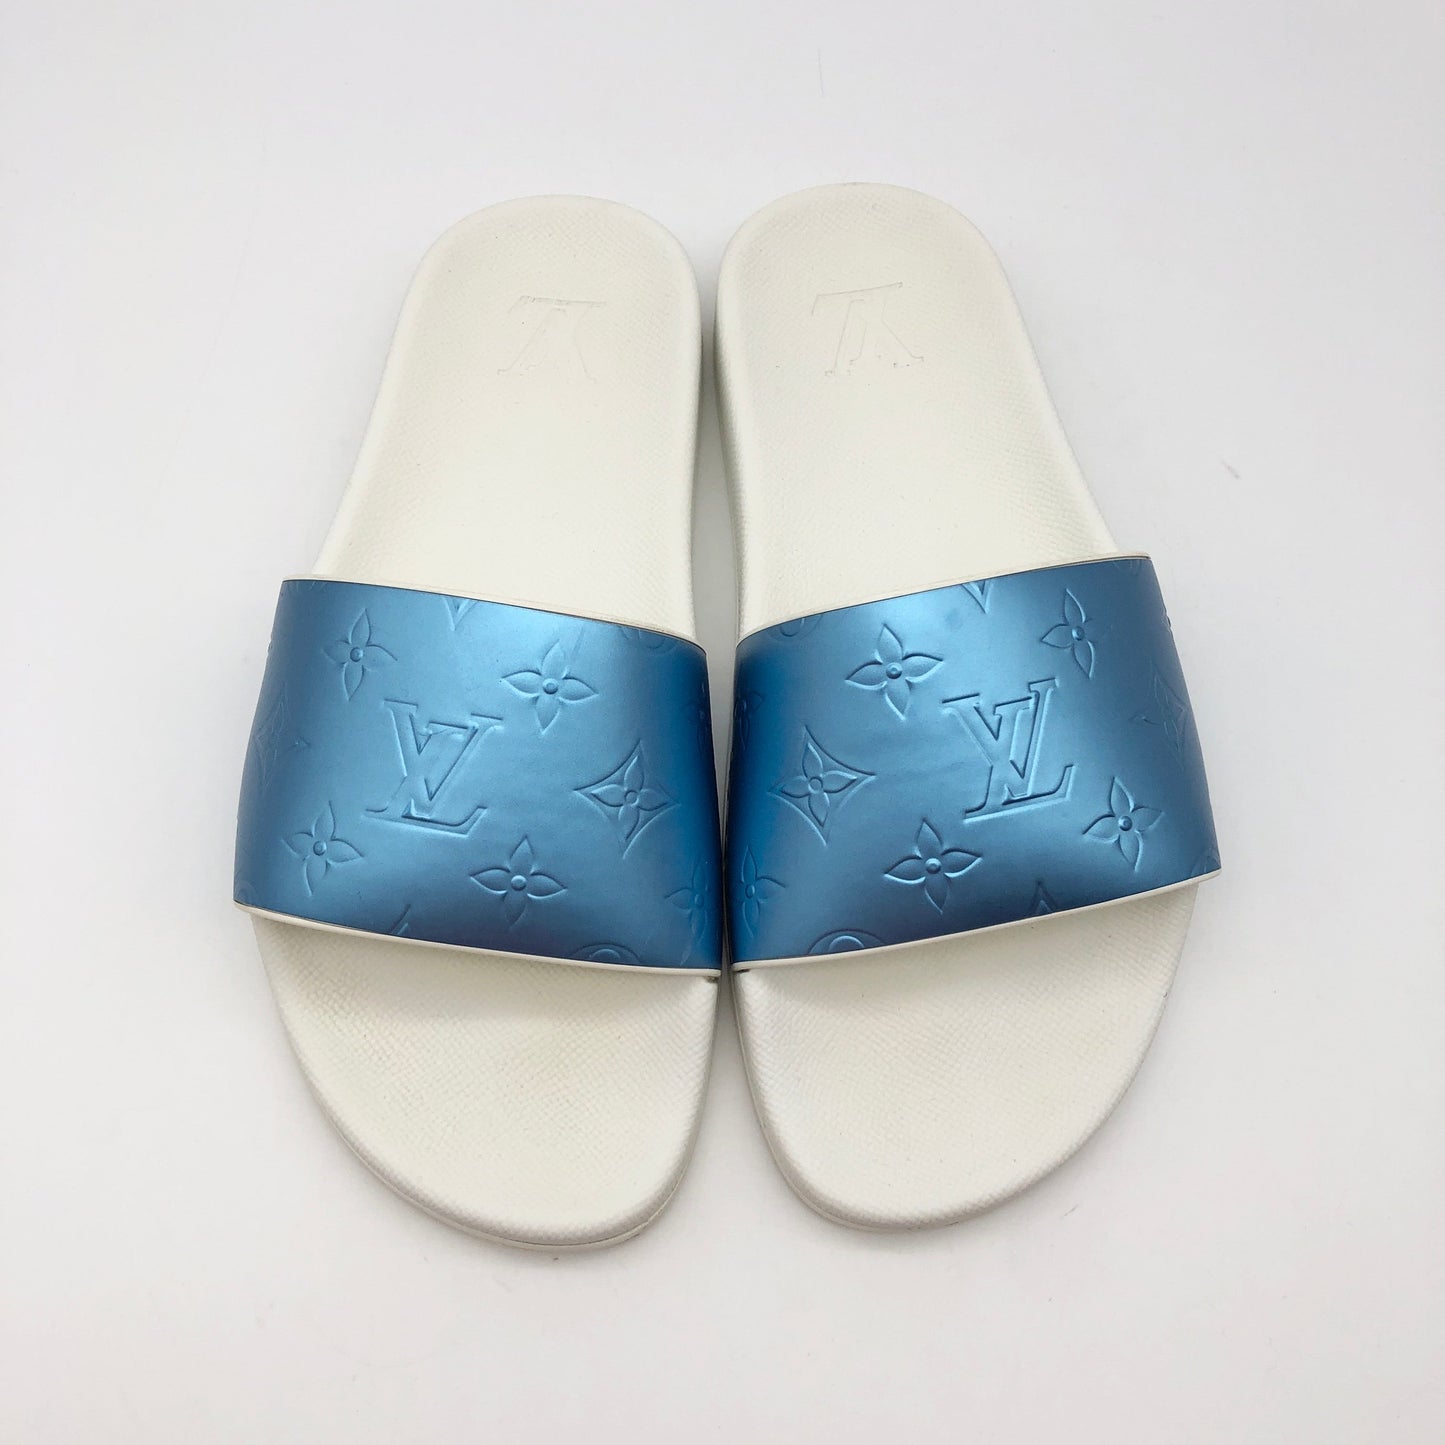 Blue & White Sandals Luxury Designer Louis Vuitton, Size 8.5